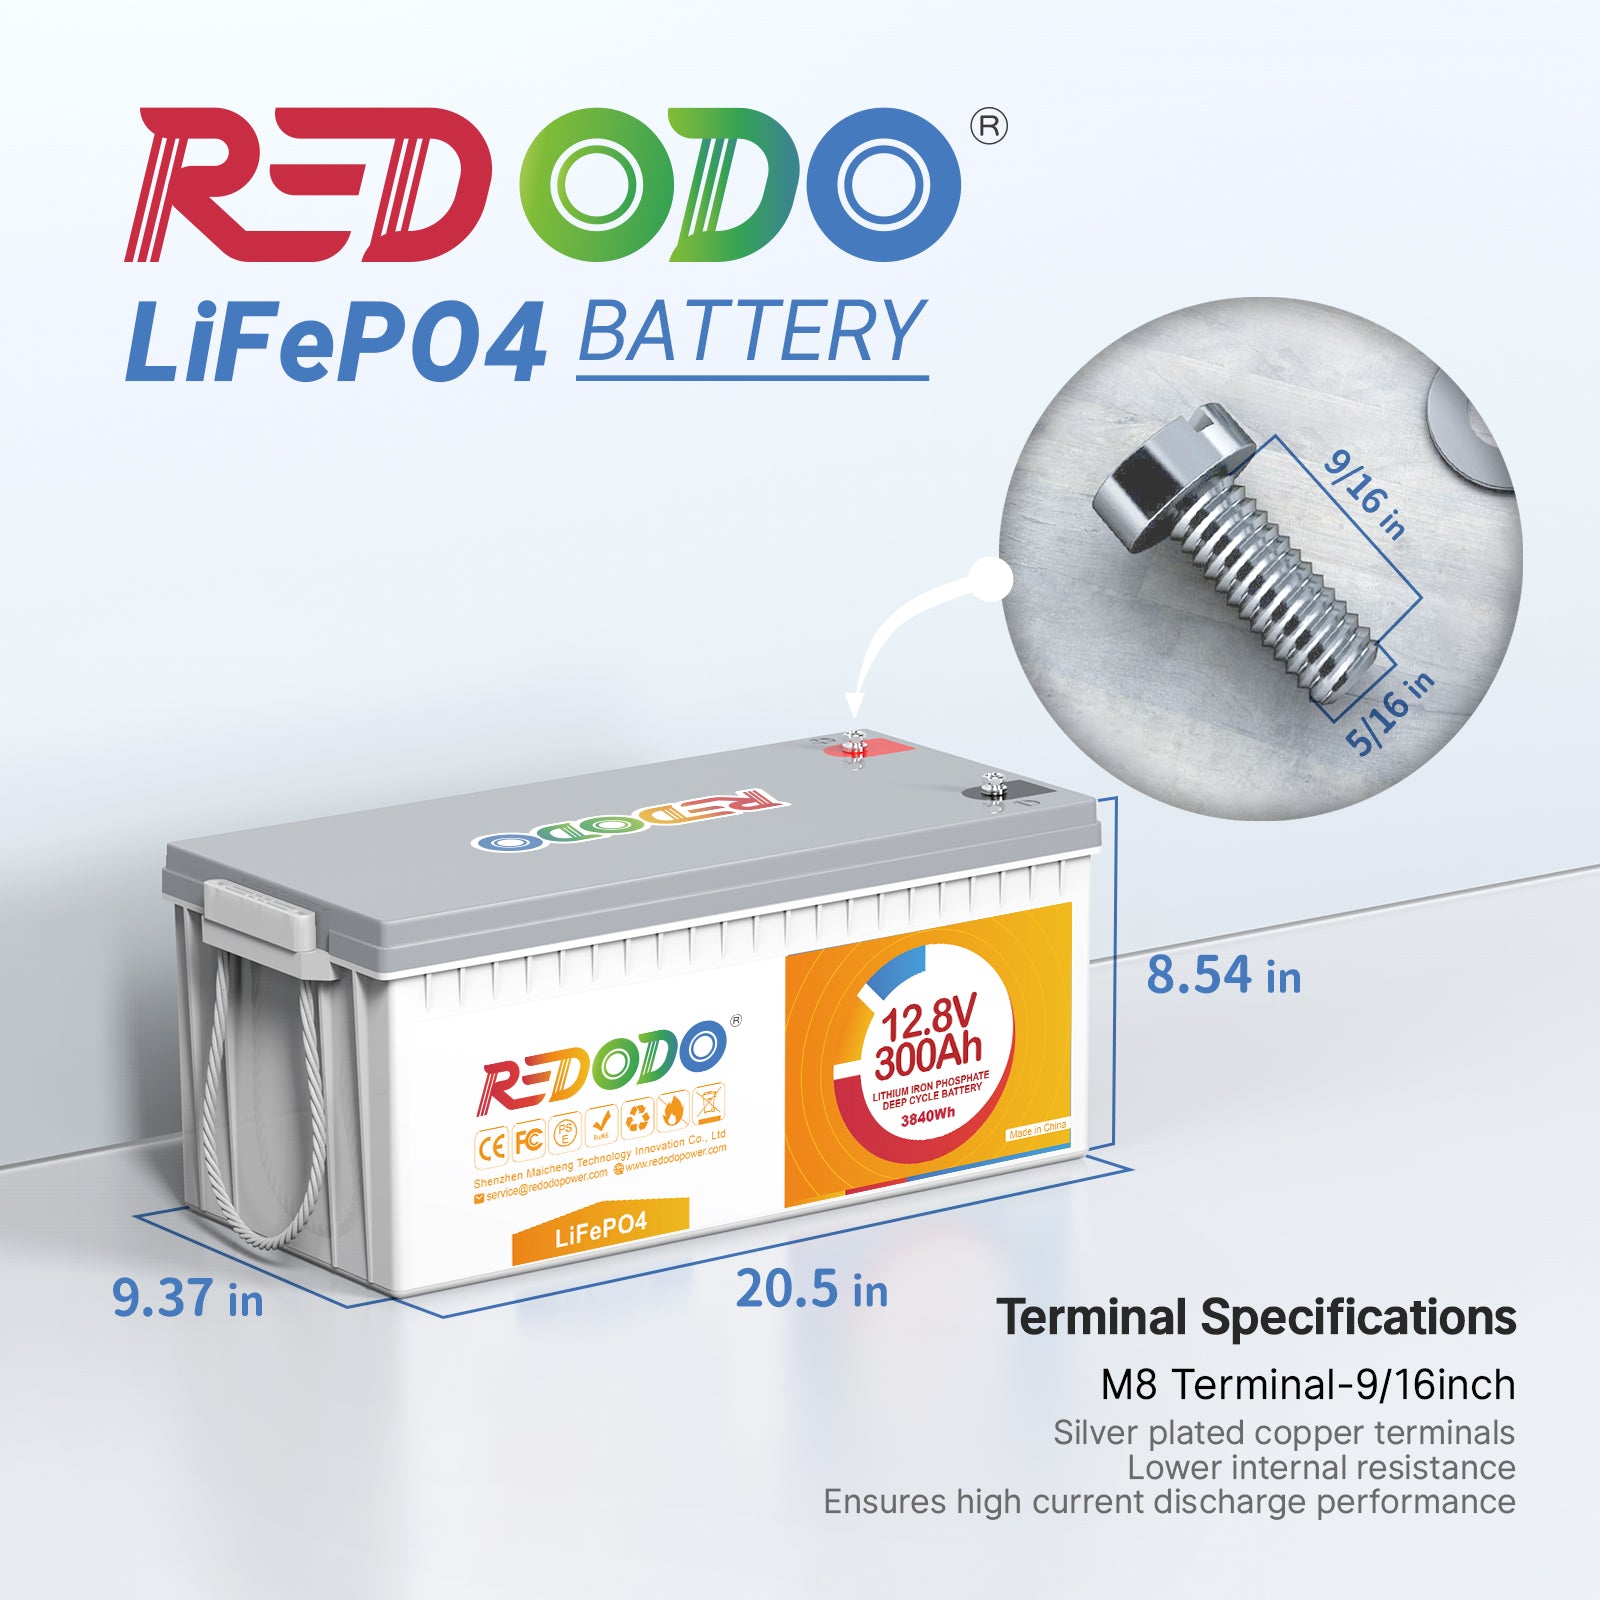 Like New-Redodo 12V 300Ah LiFePO4 Battery | 3.84kWh & 2.56kW